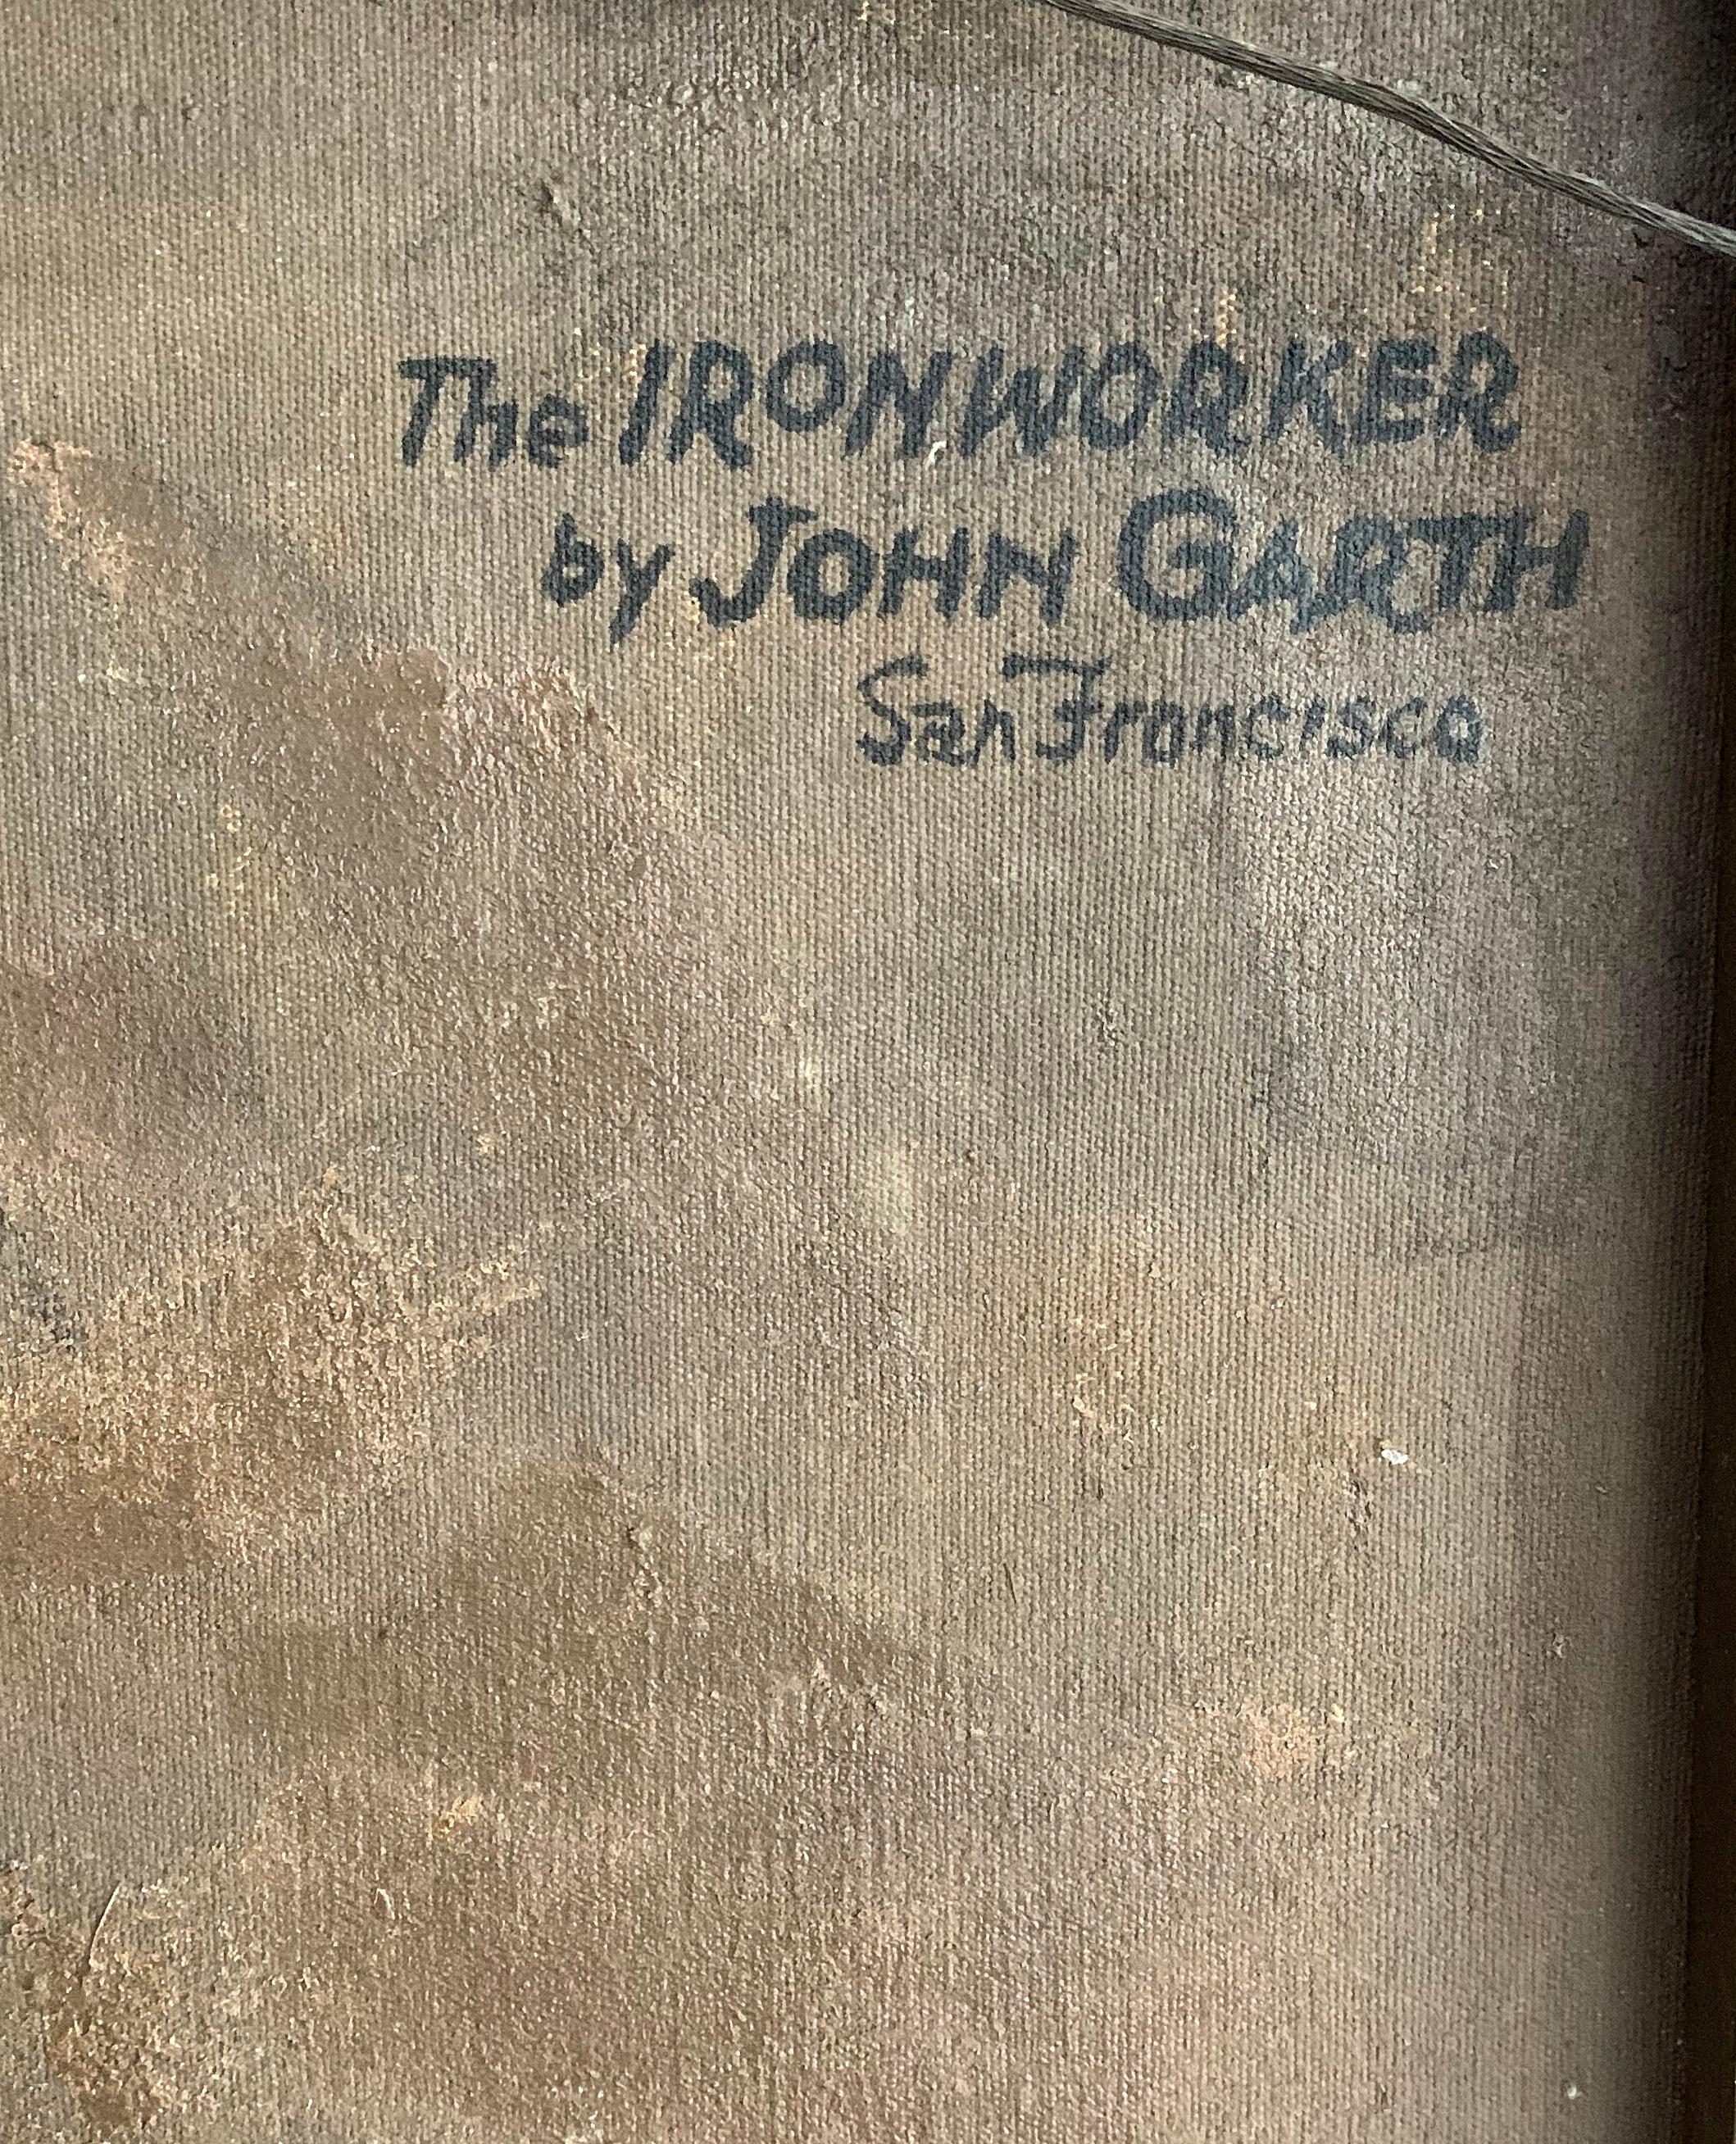 john garth painter